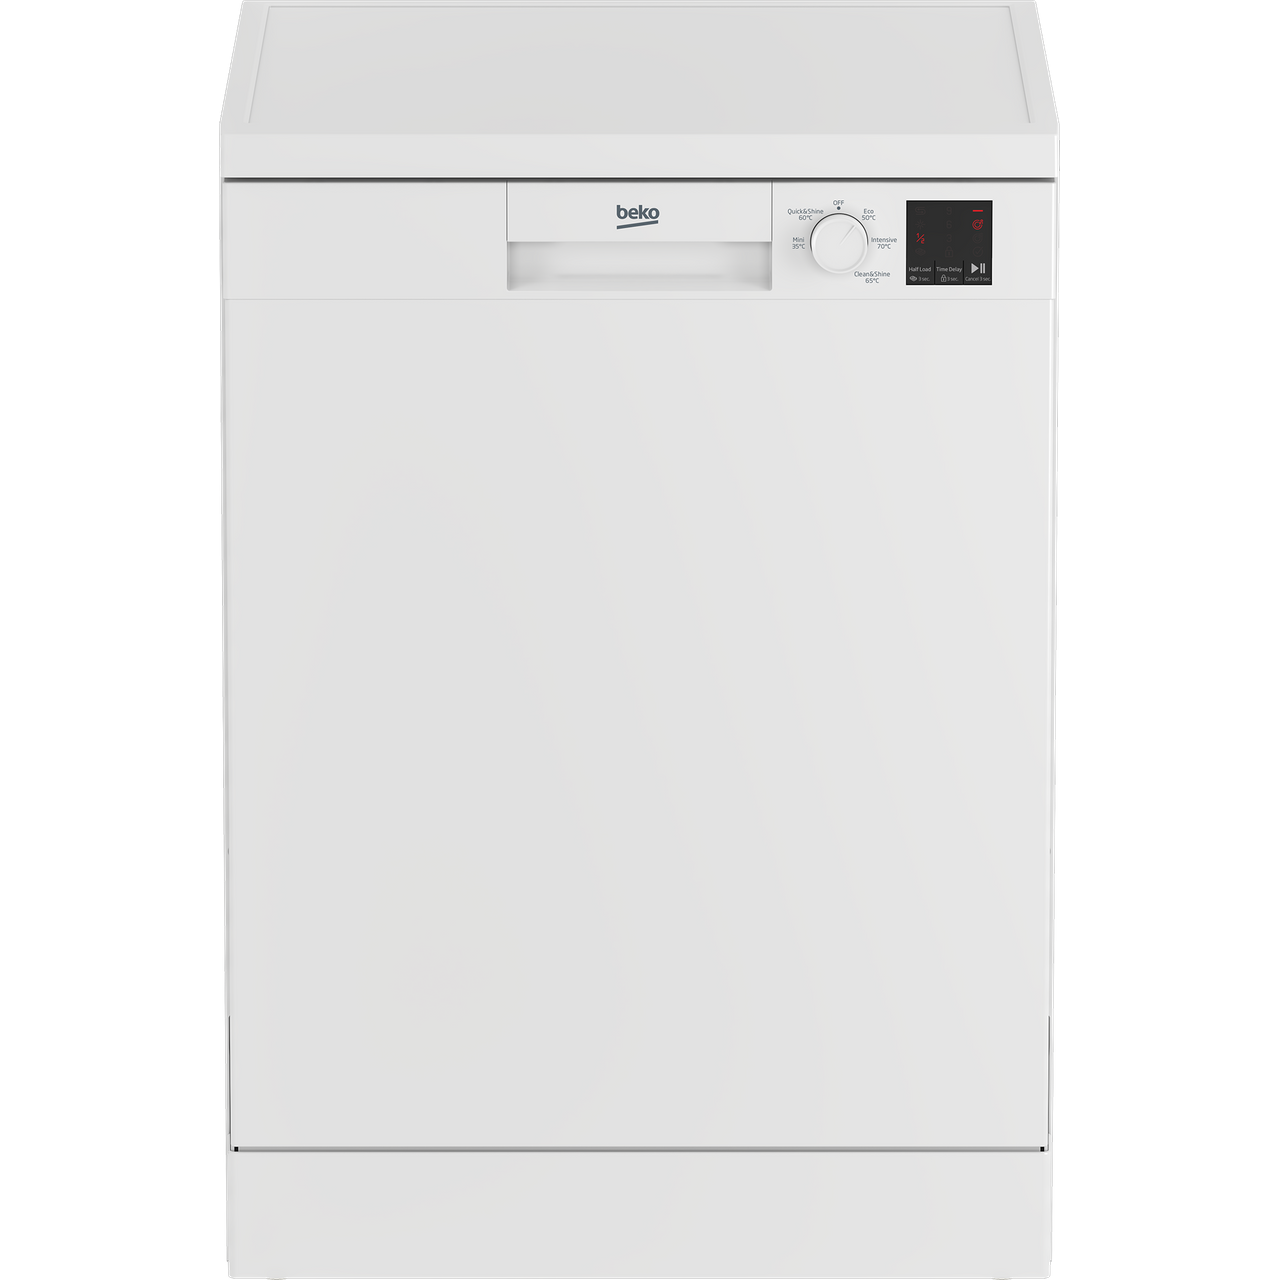 Beko DVN05R20W Standard Dishwasher Review